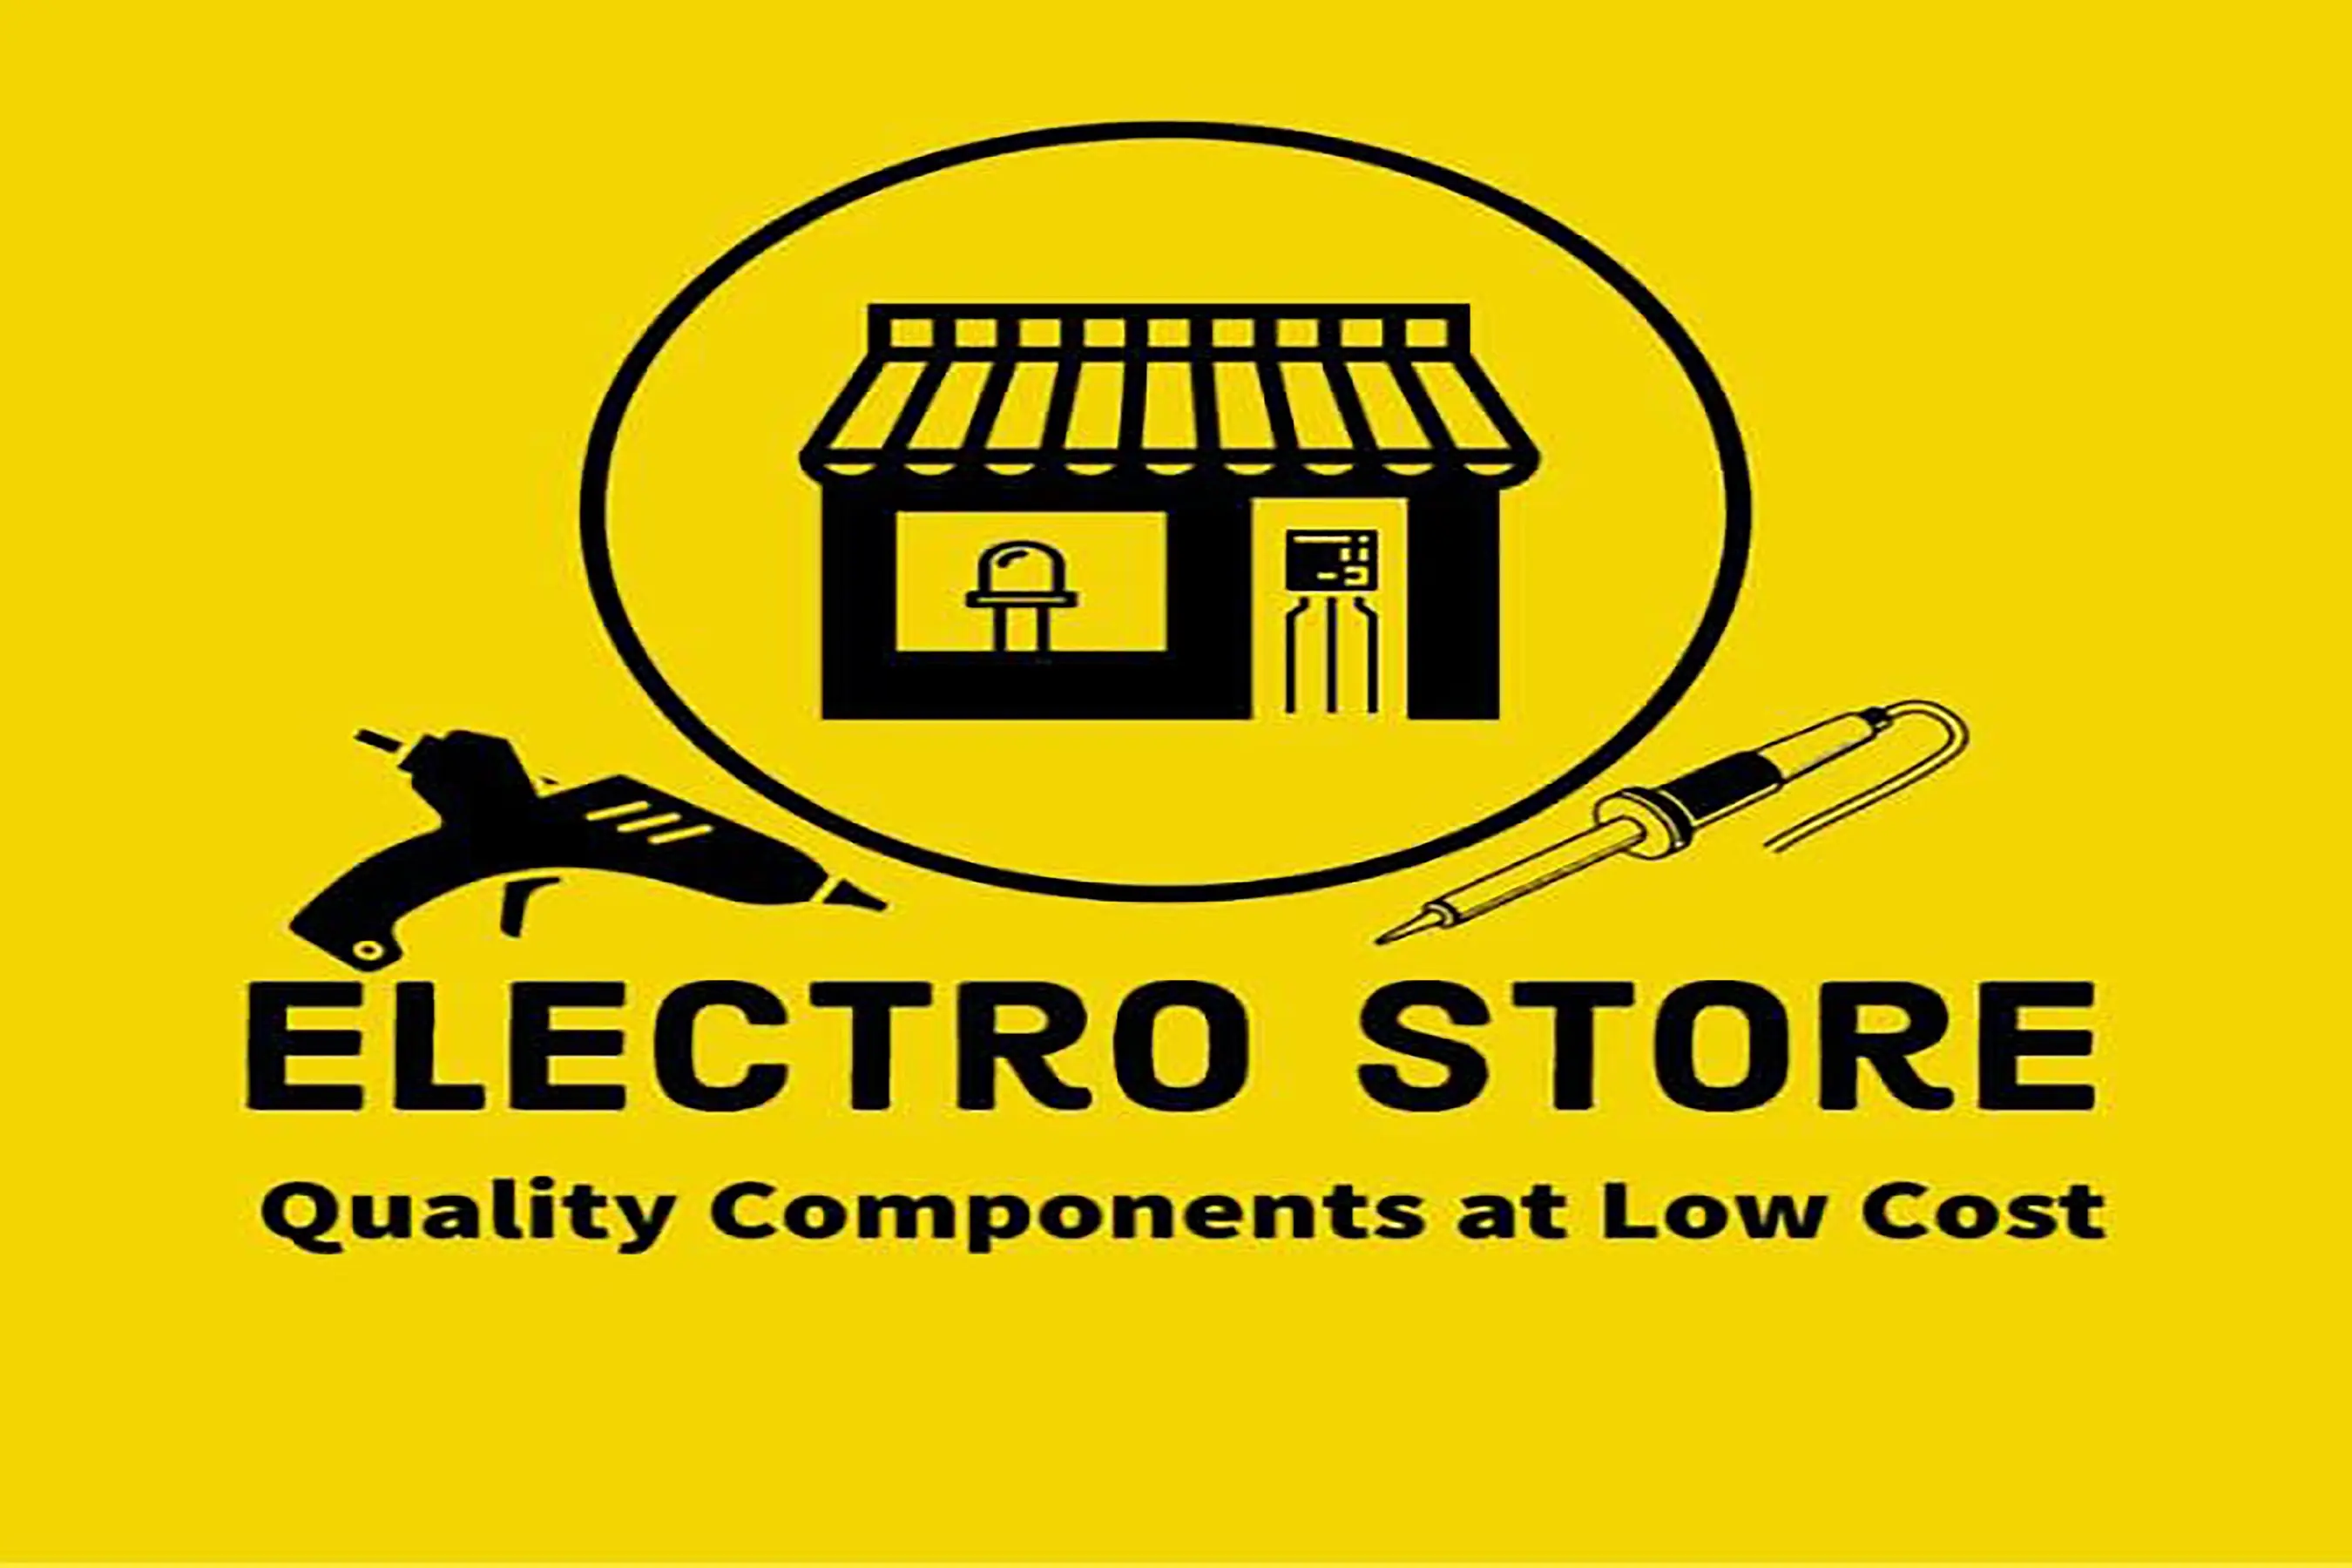 Electro store customer of Quixgo